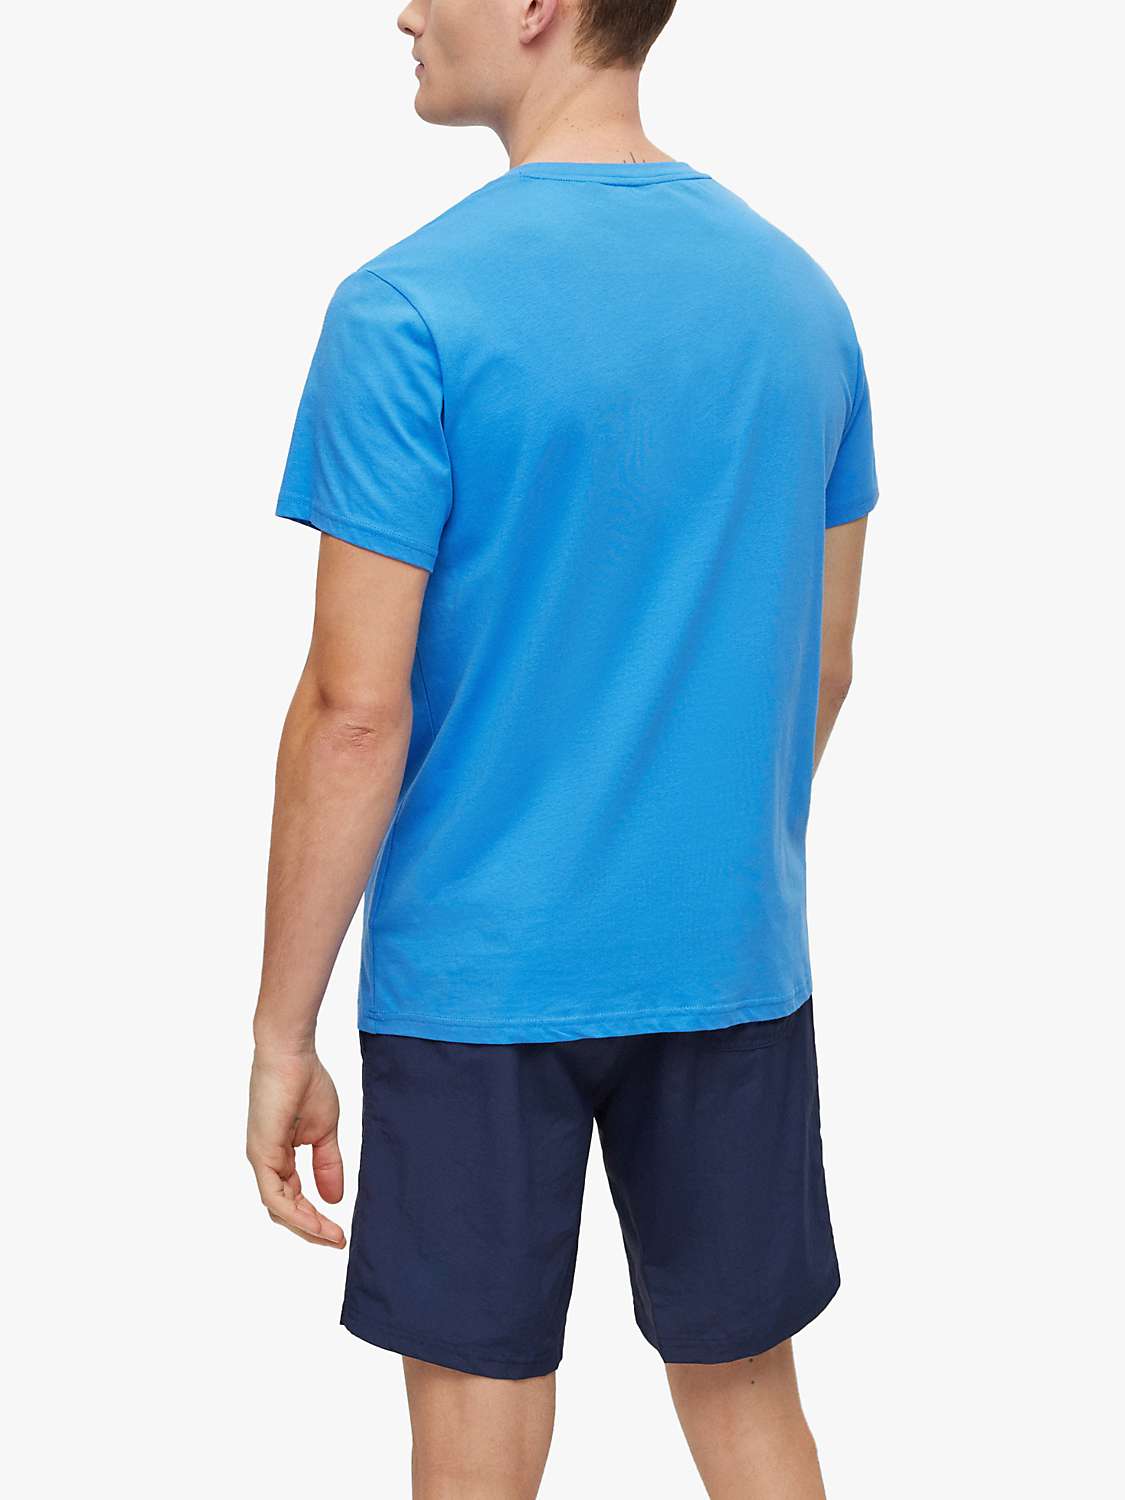 BOSS Business Logo Lounge T-Shirt, Medium Blue at John Lewis & Partners